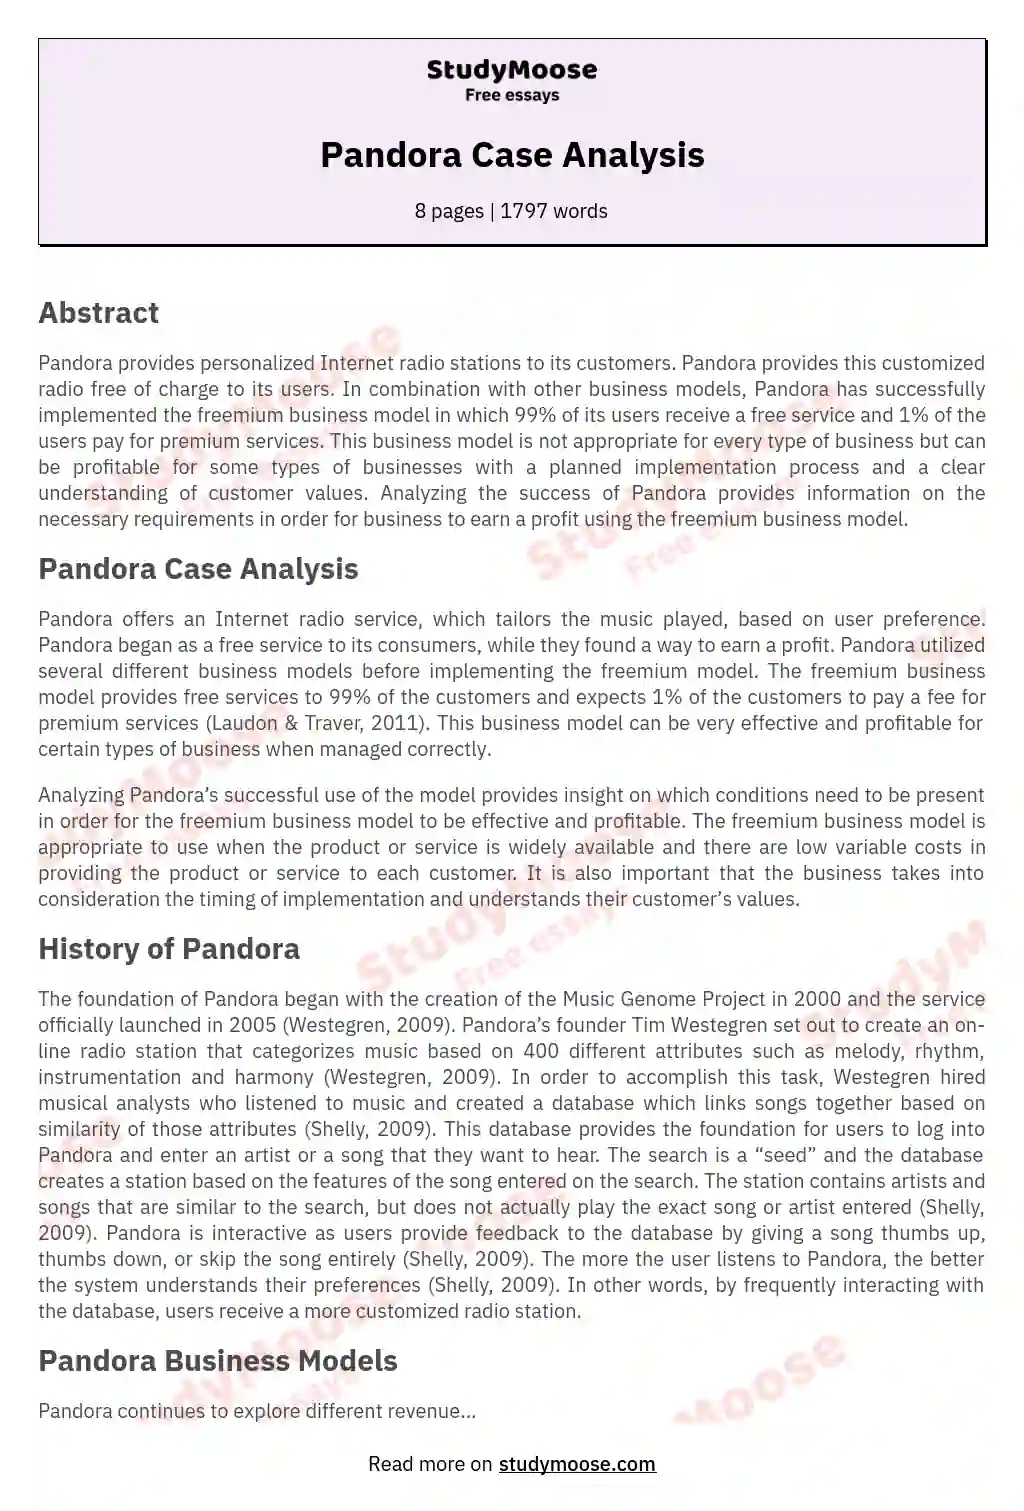 Pandora Case Analysis essay